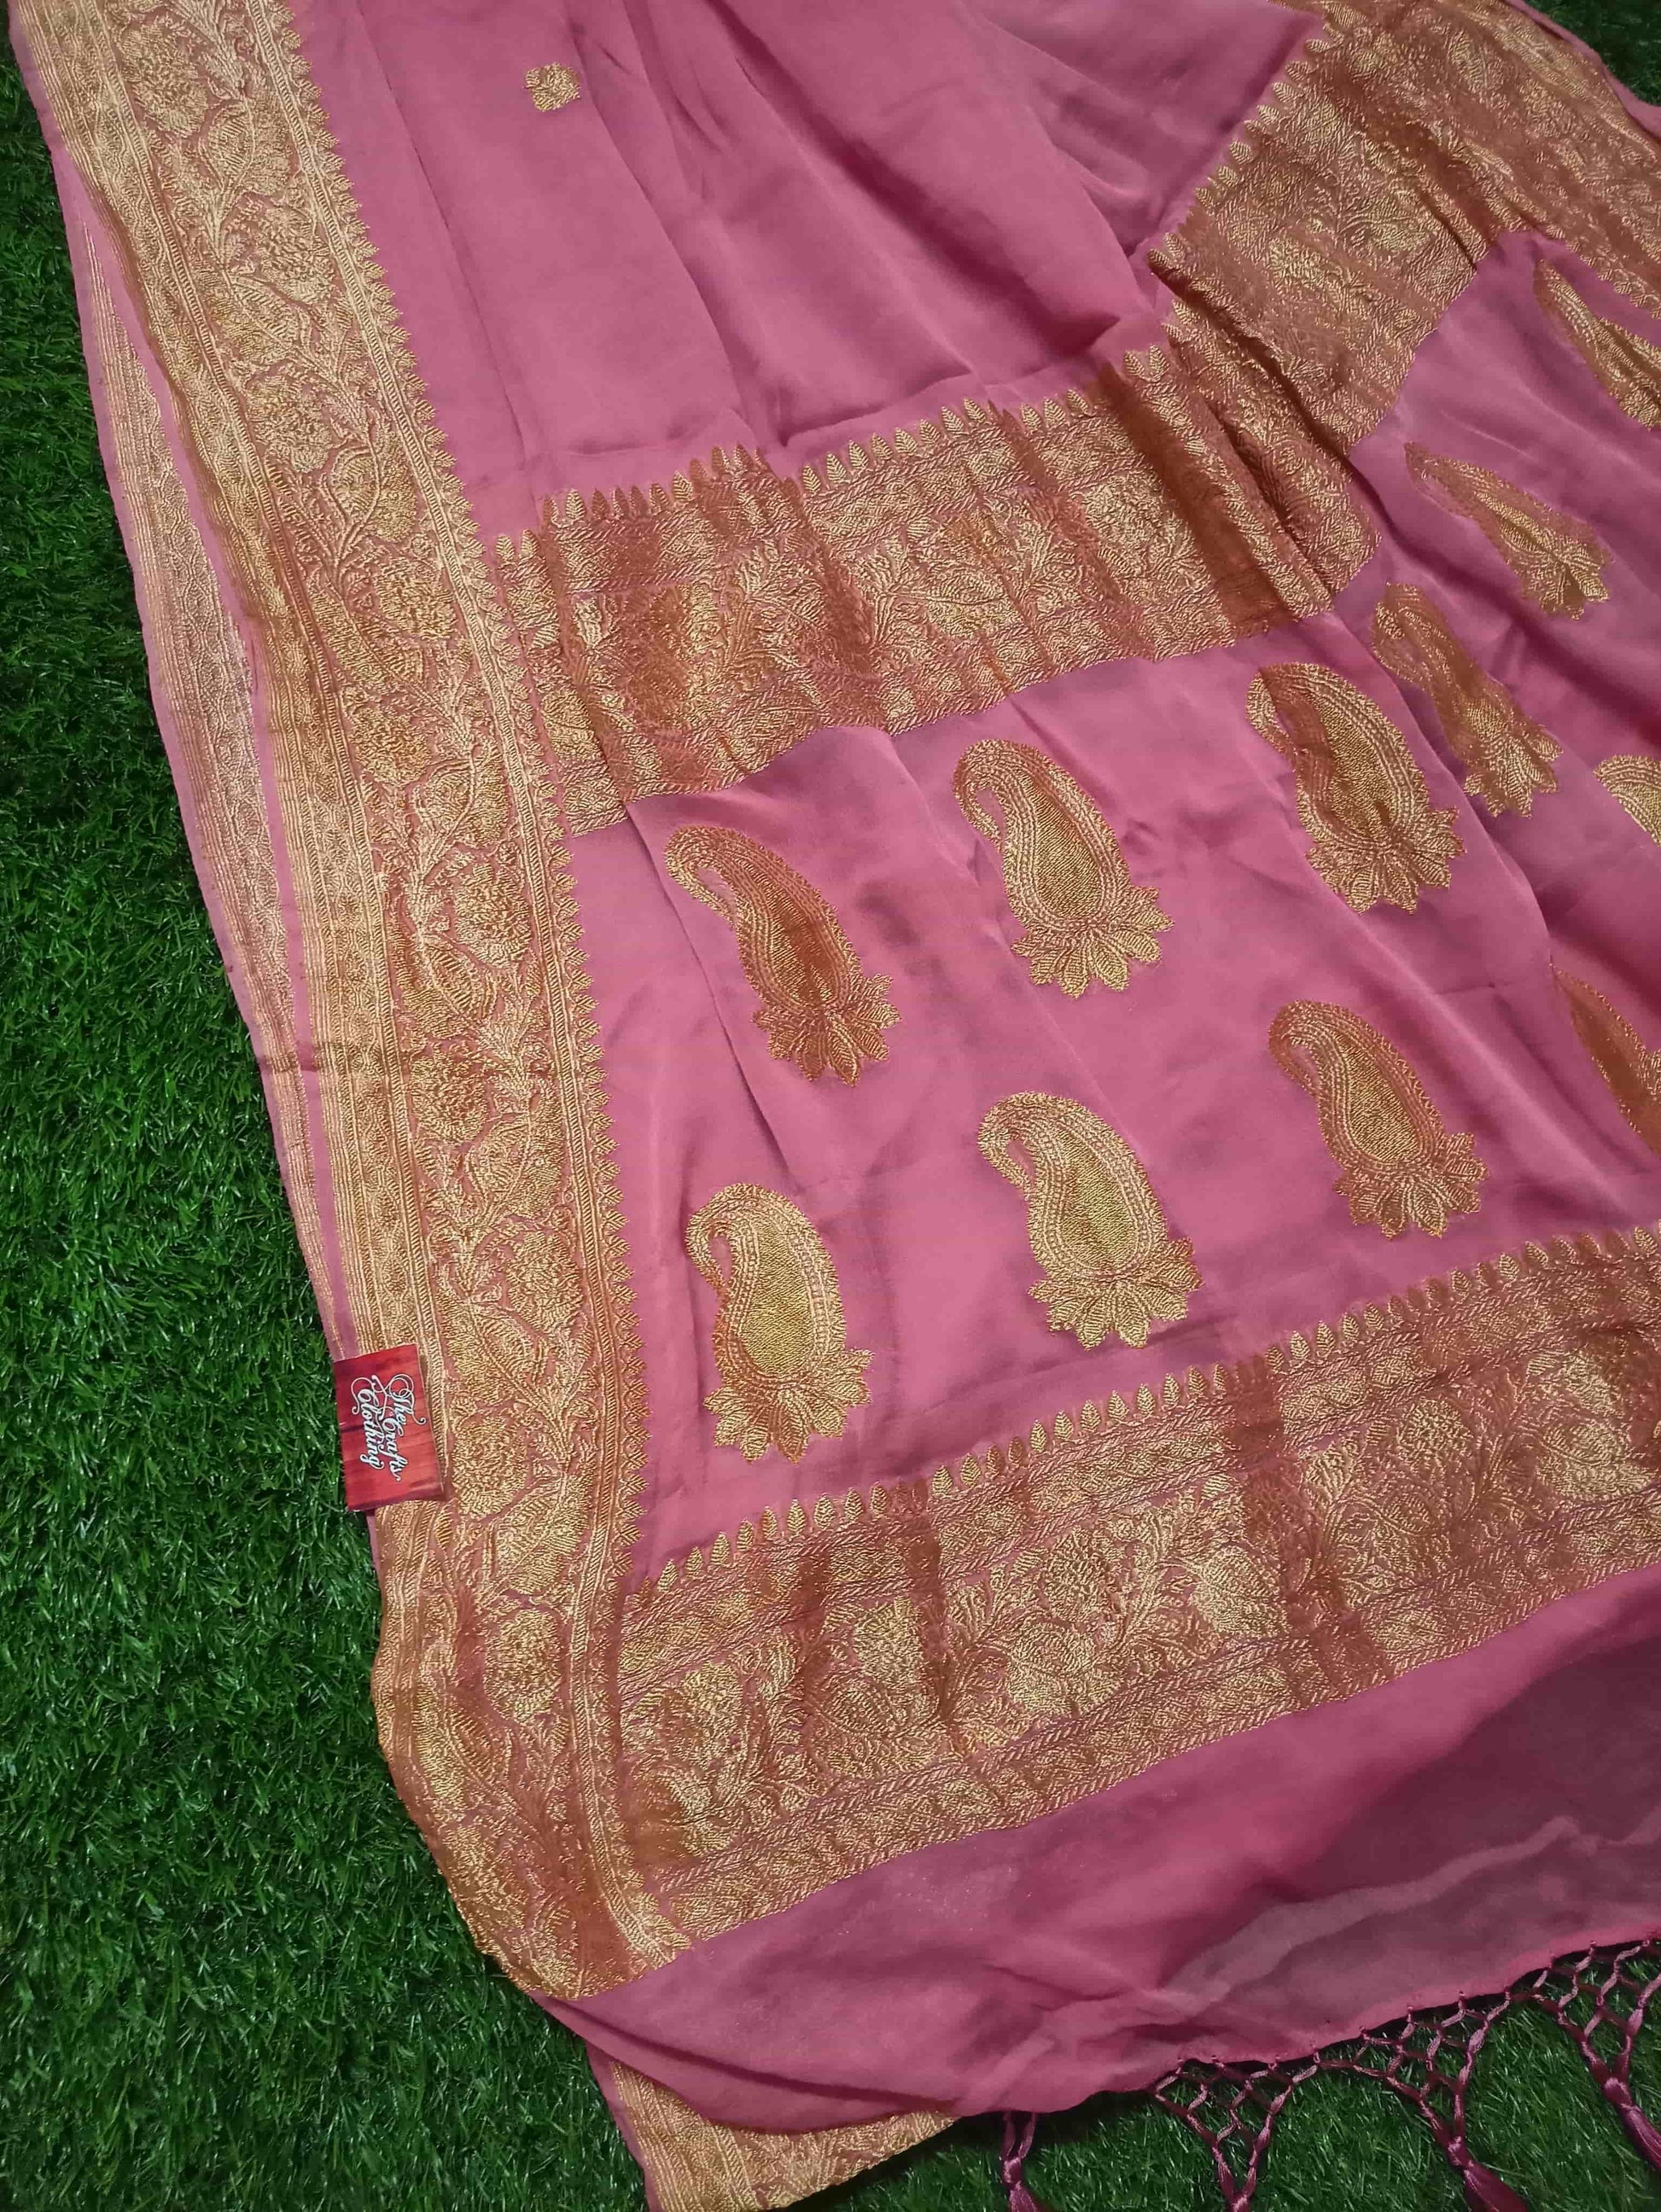 Pure Georgette Handloom Banarasi Saree - Gold Zari - The Crafts Clothing